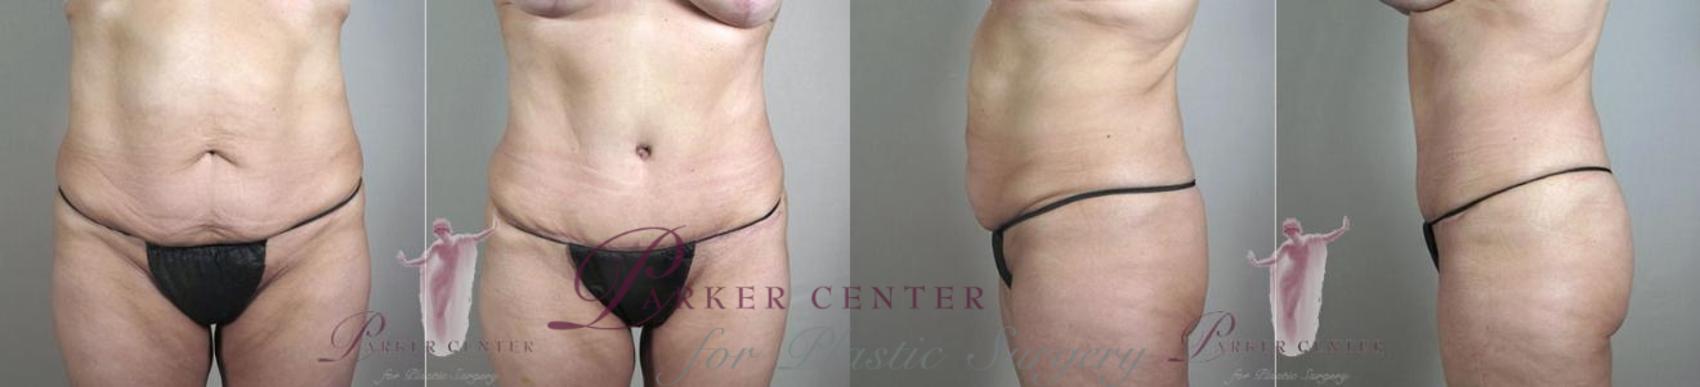 Tummy Tuck Case 1148 Before & After Front | Paramus, NJ | Parker Center for Plastic Surgery